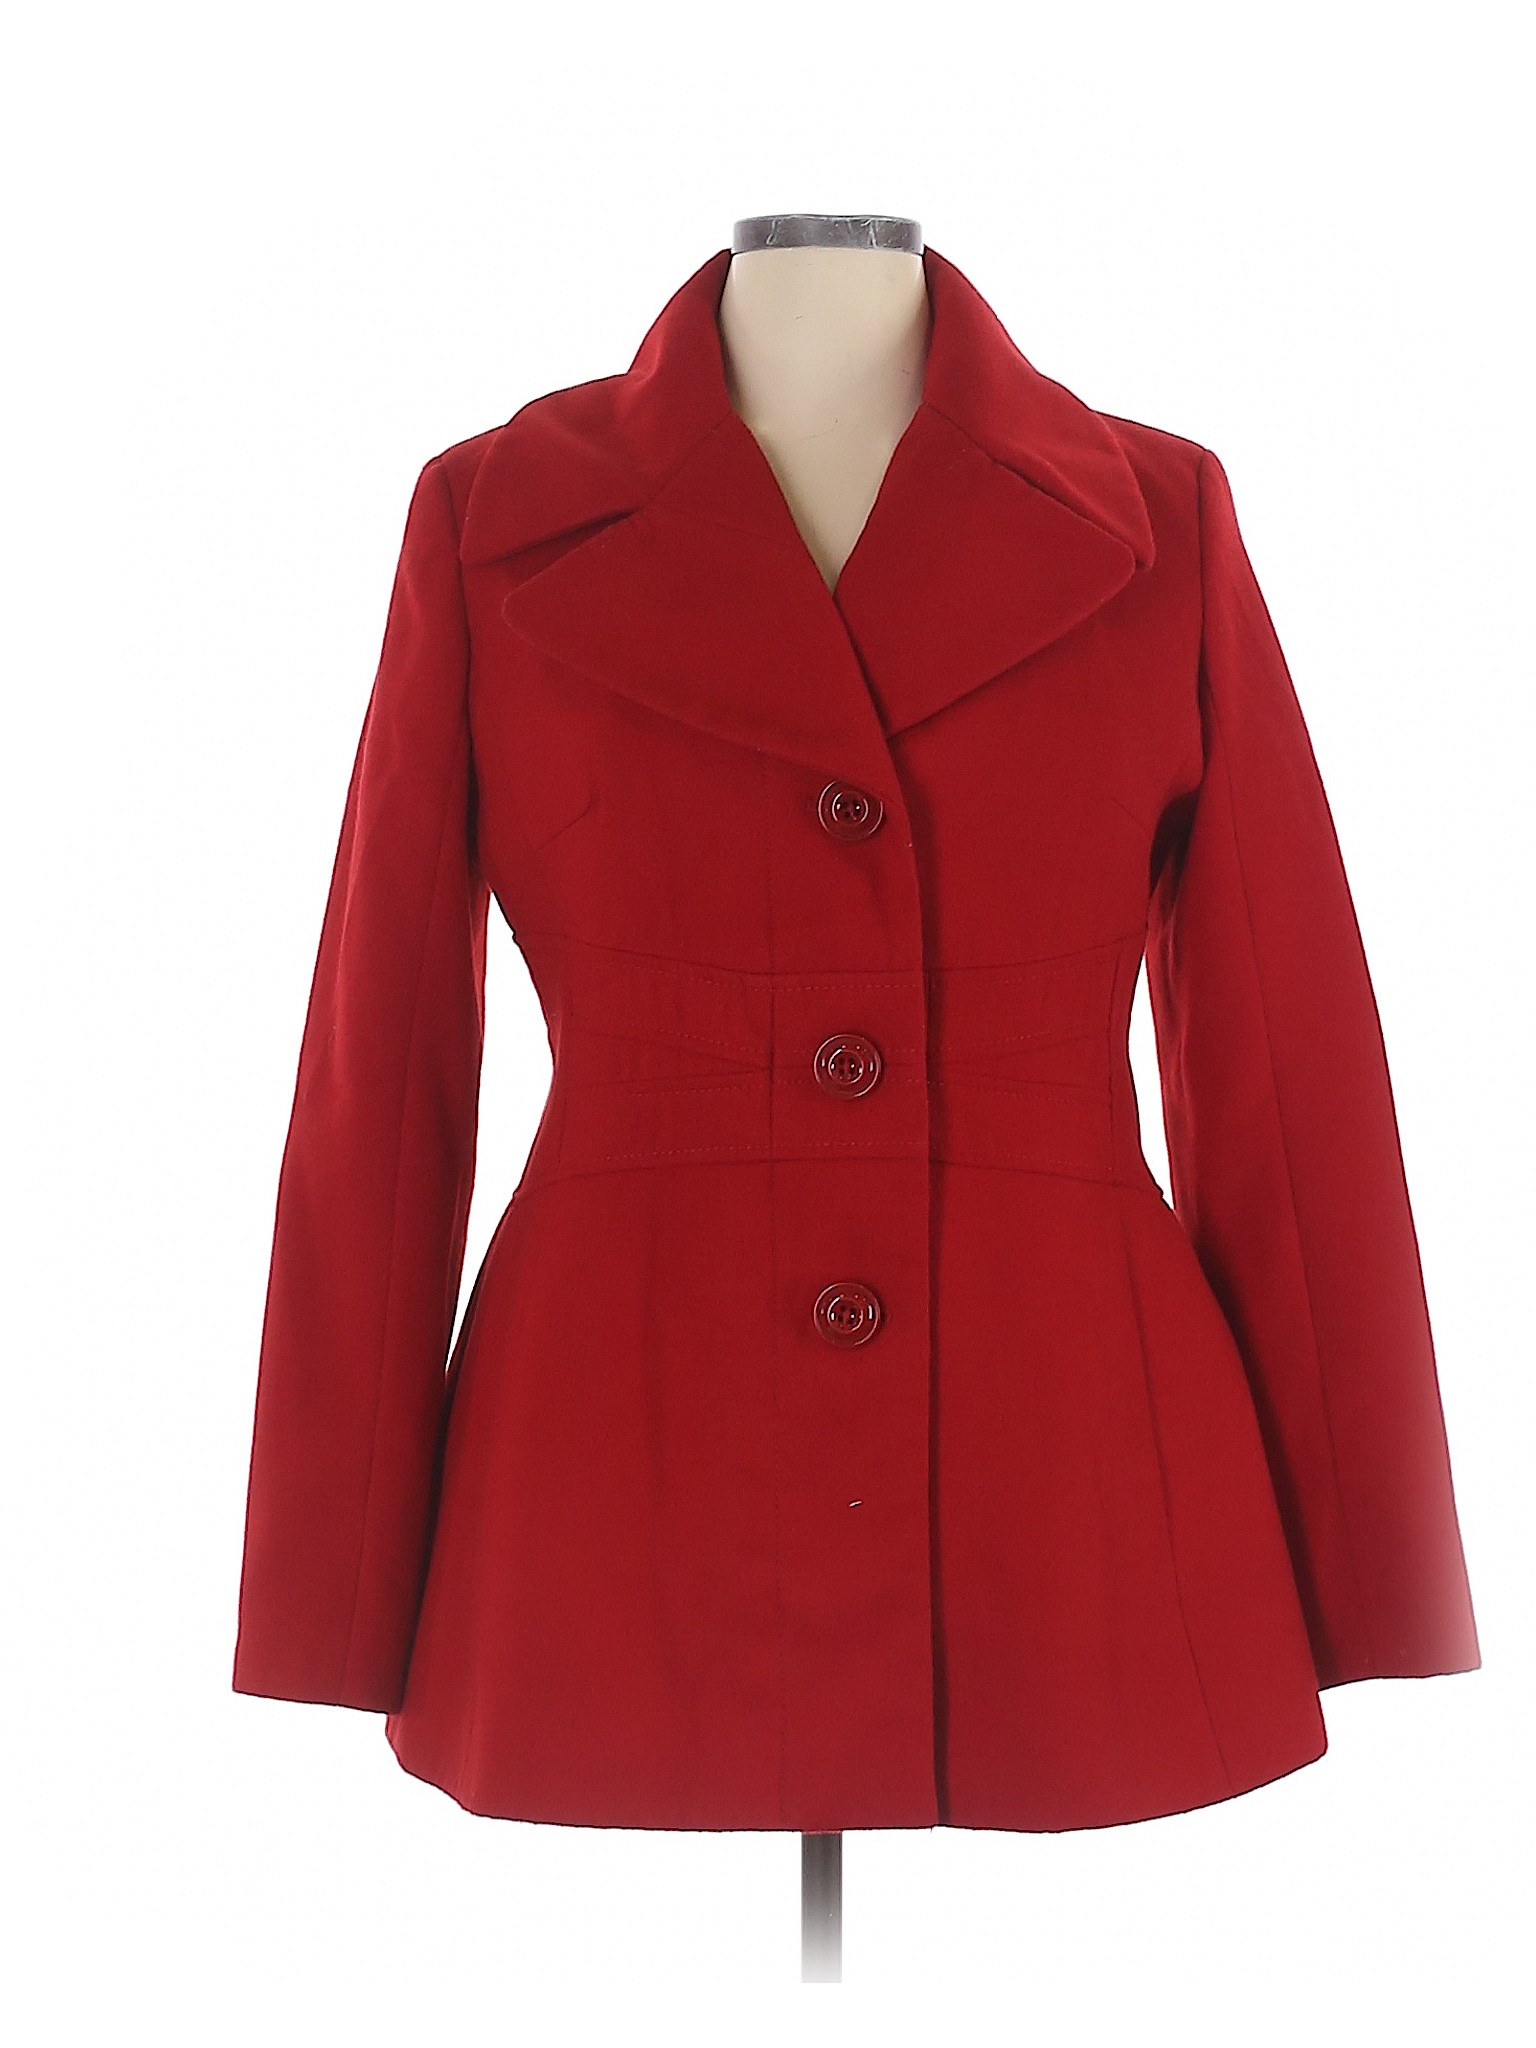 Jessica Simpson Women Red Coat XL | eBay